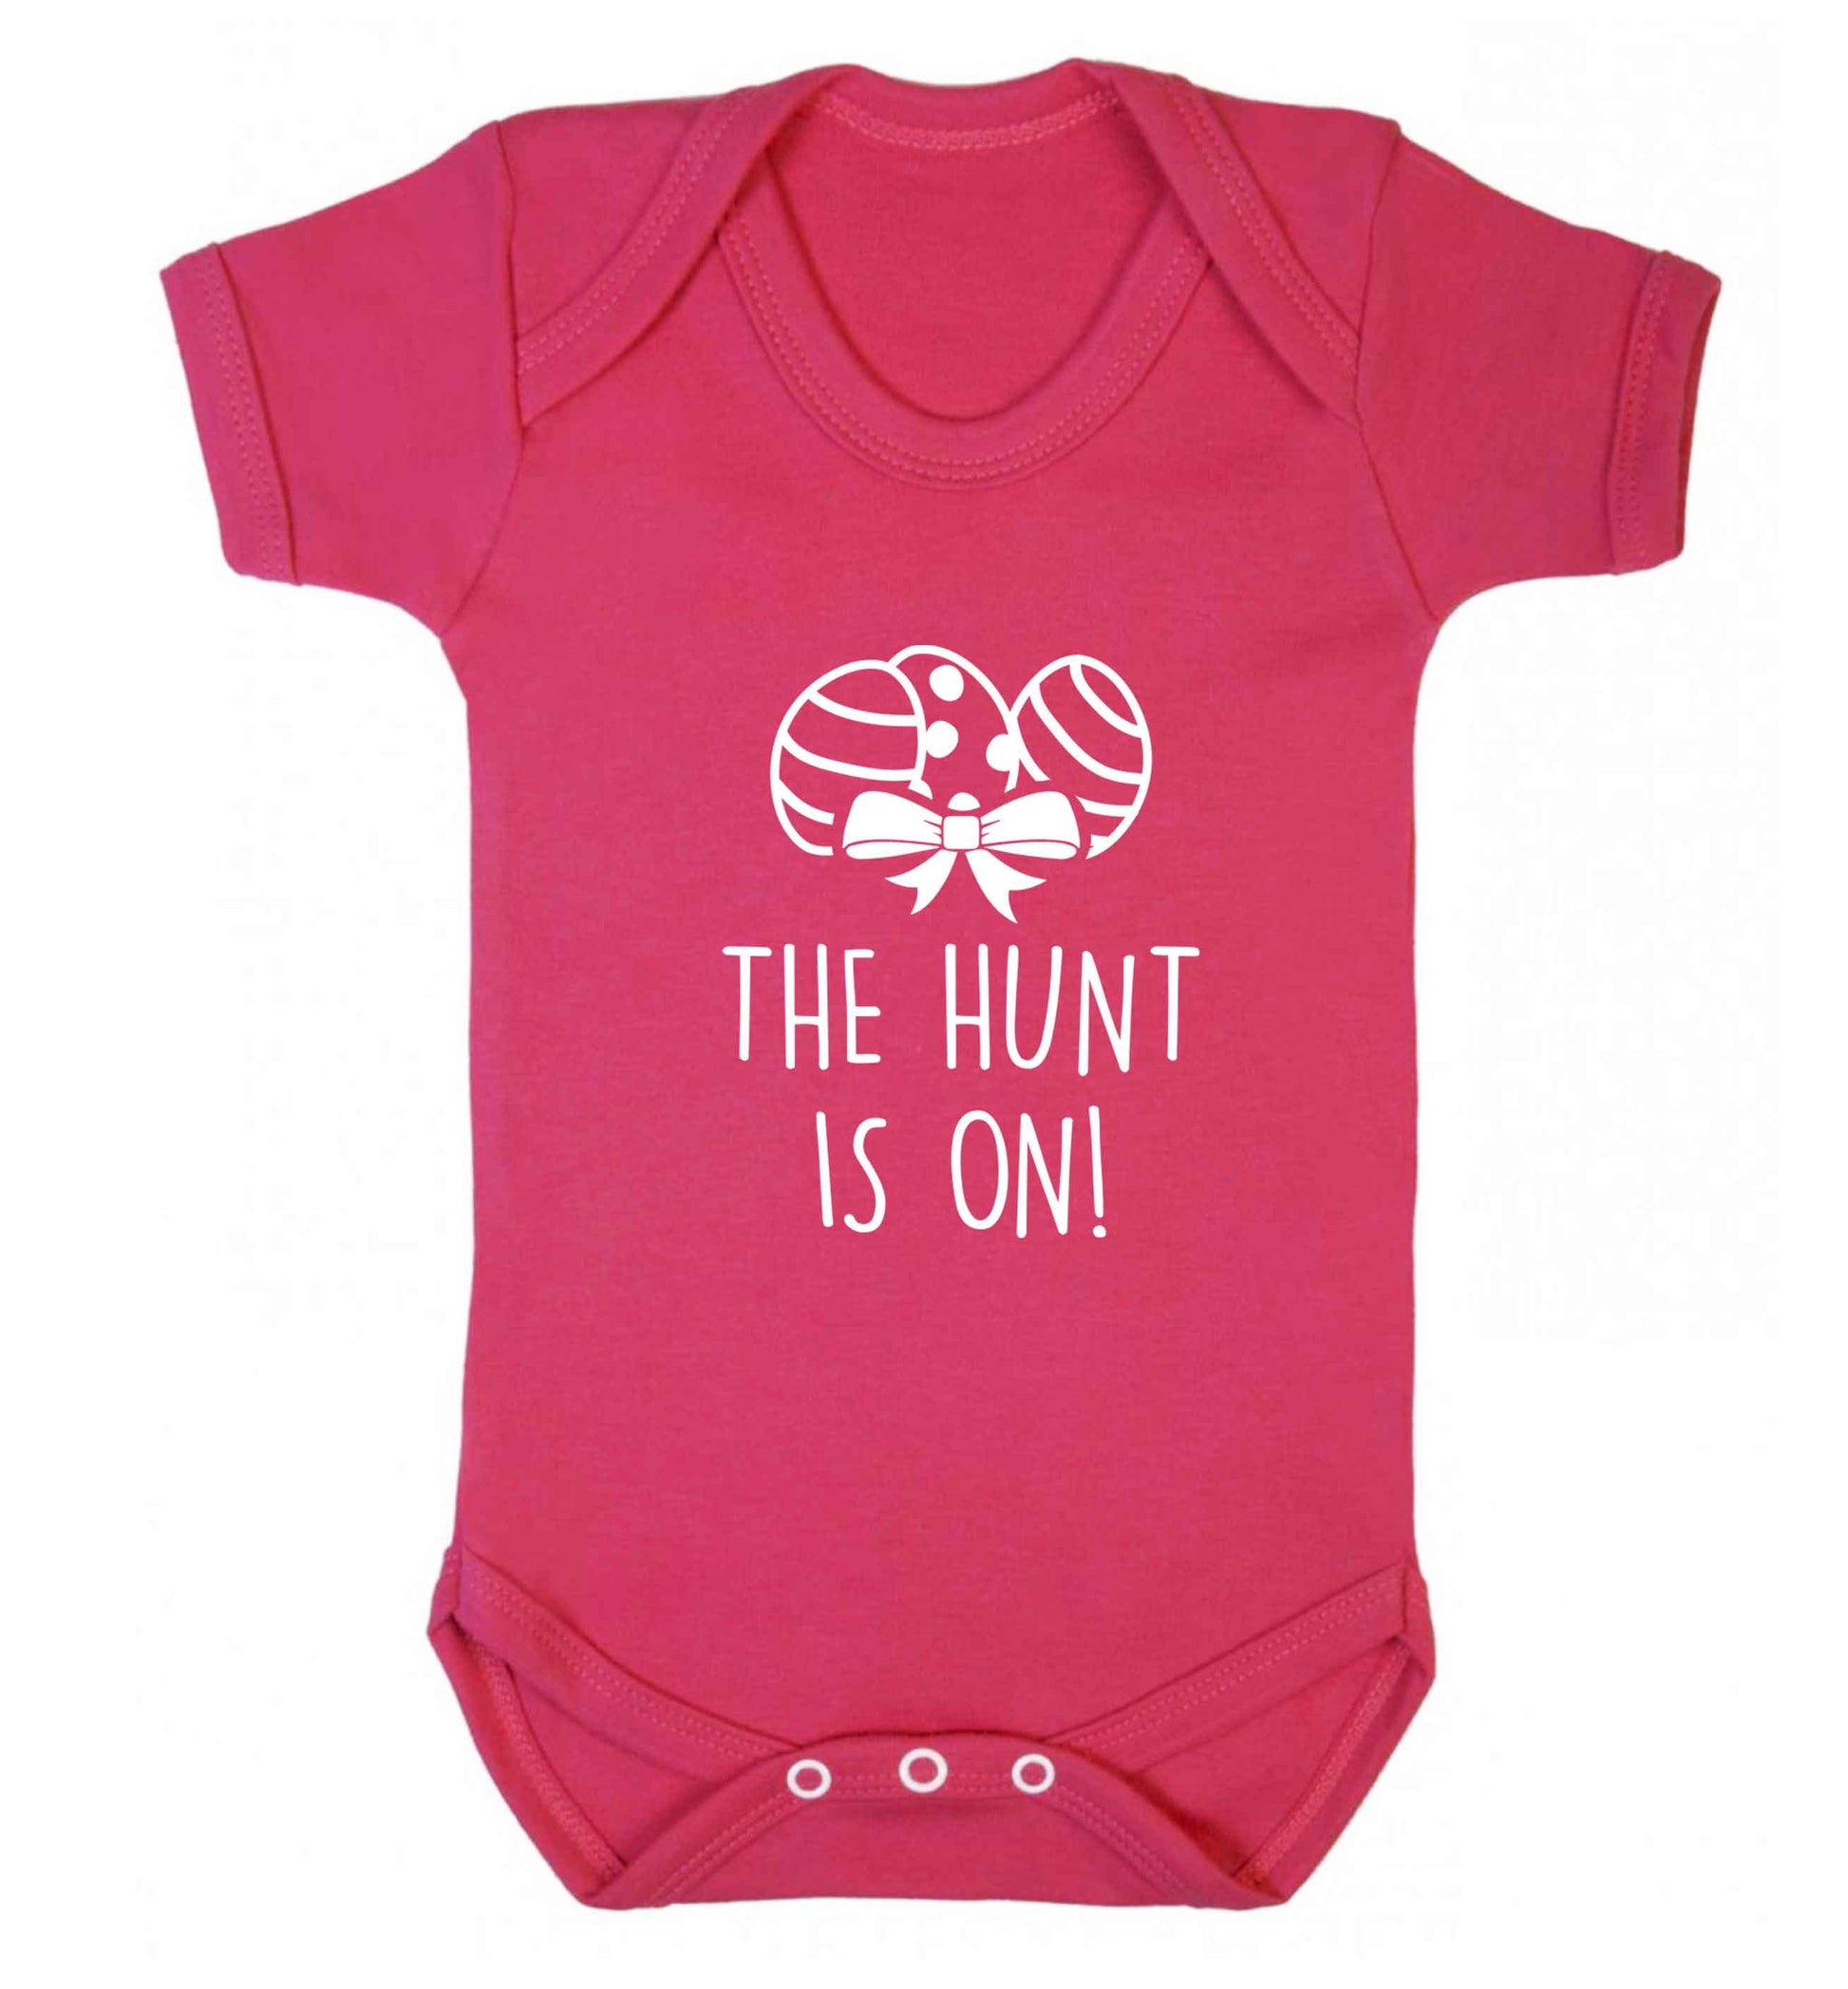 The hunt is on baby vest dark pink 18-24 months